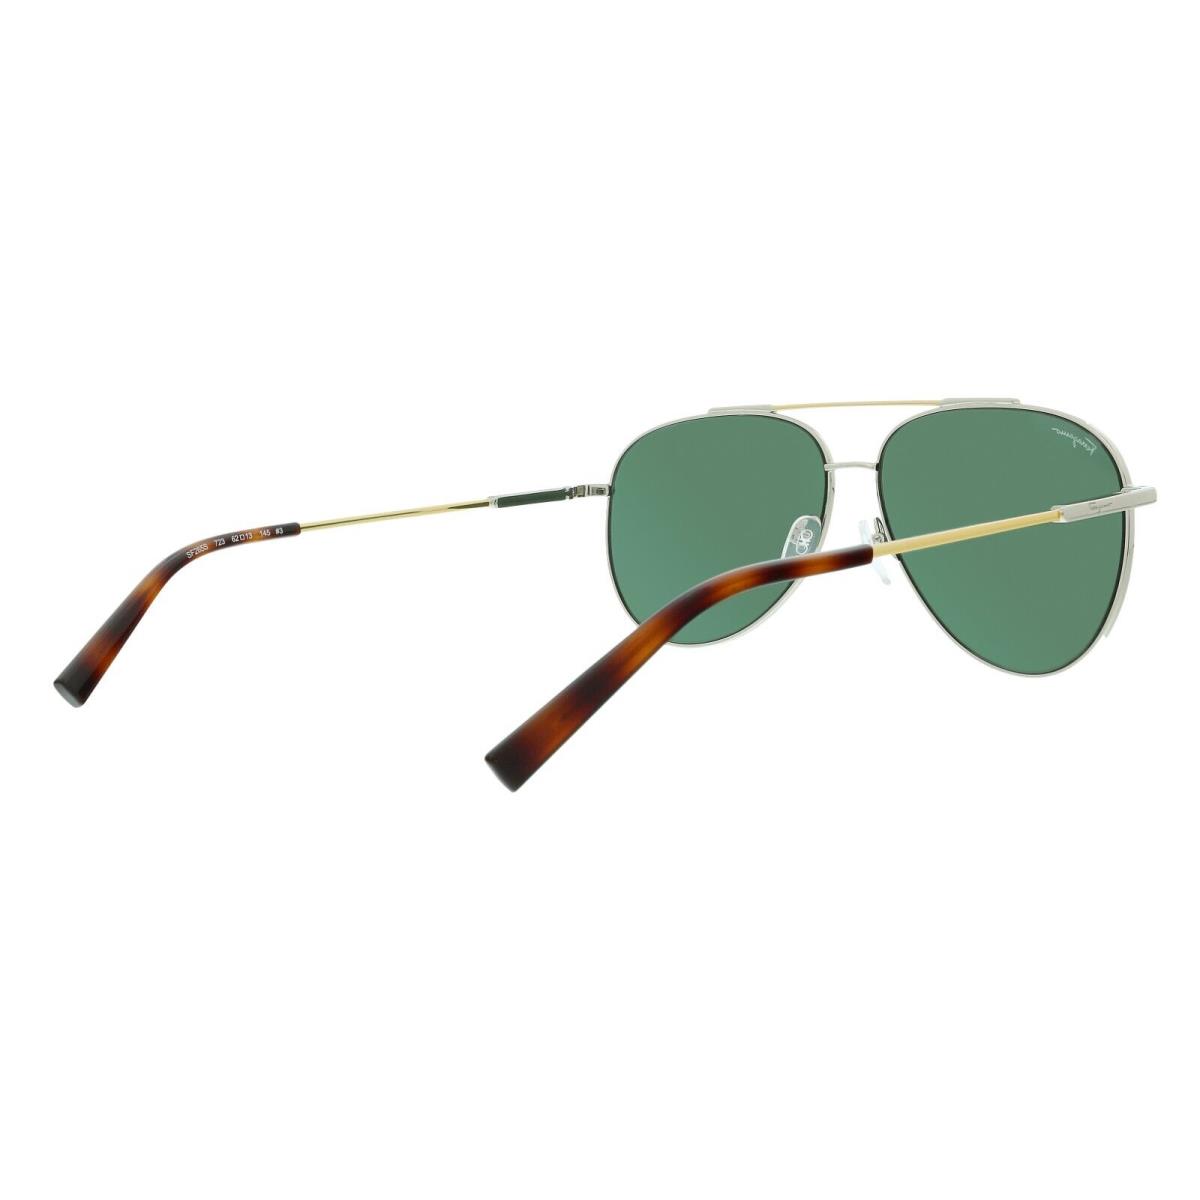 Salvatore Ferragamo sunglasses  - Gold Tortoise Frame, Green Lens 2